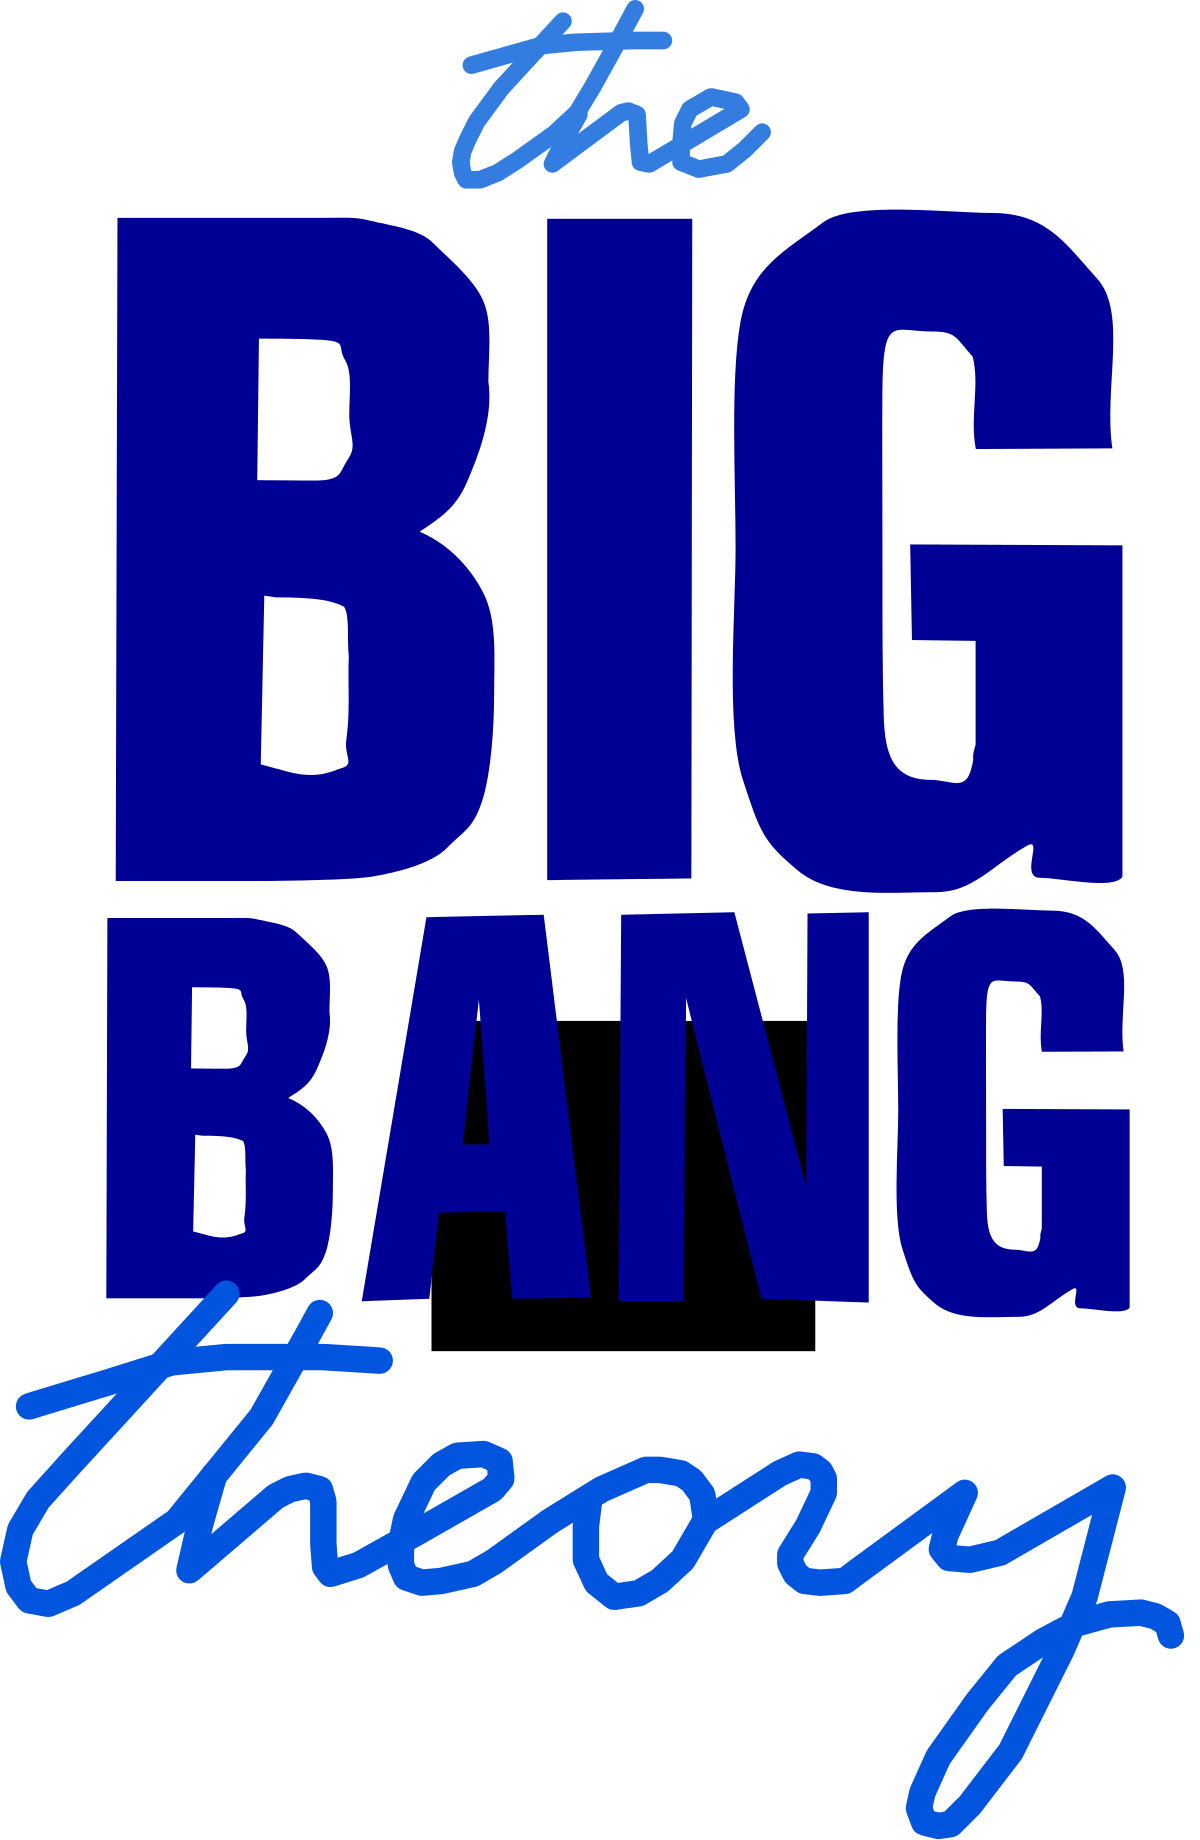 The Big Bang Theory Characters PNG Image Background